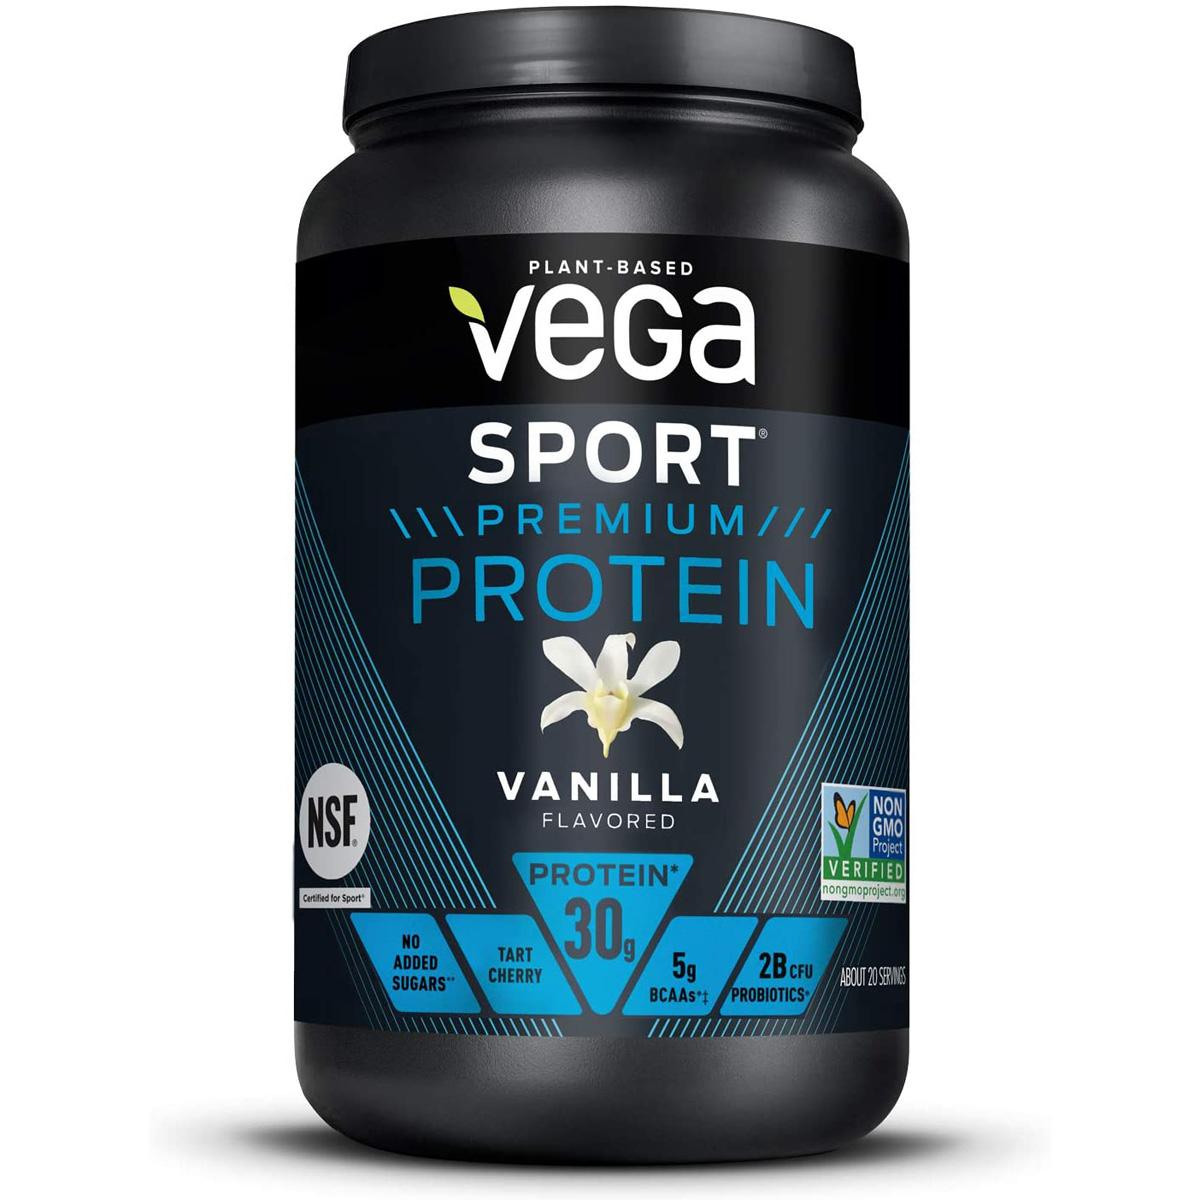 Vega Sport Premium Protein Powder for $29.99 Shipped